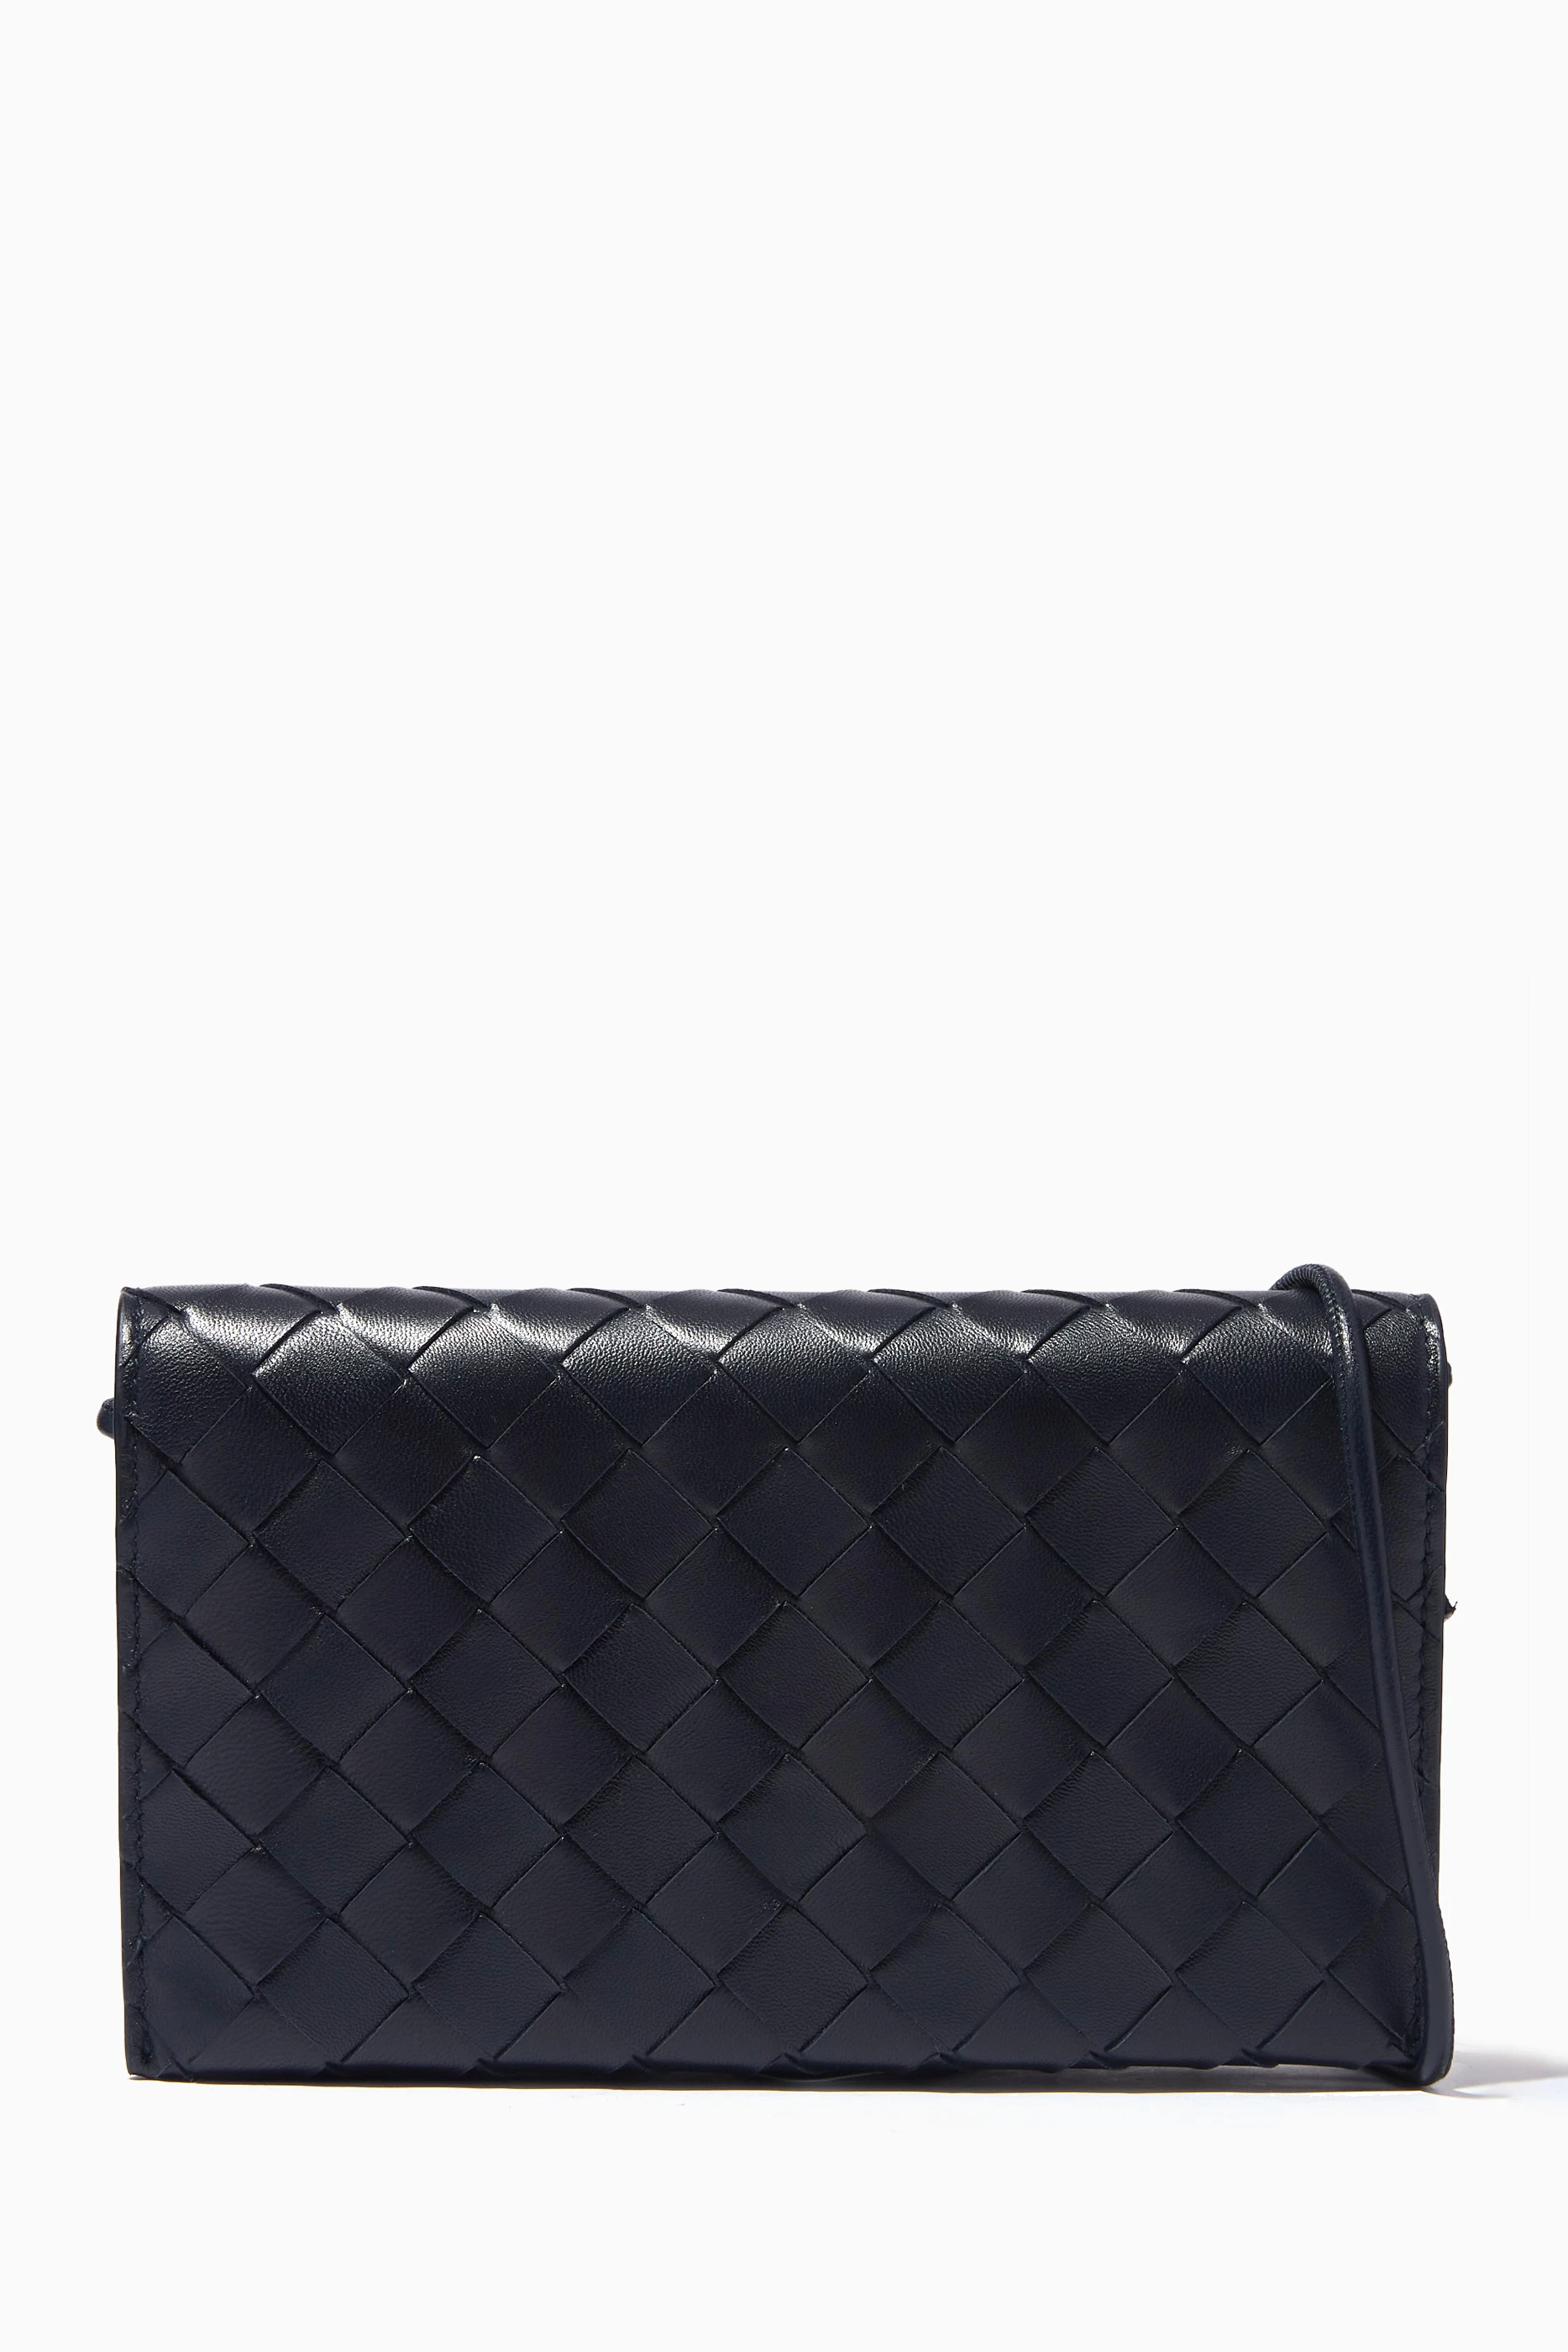 Shop Bottega Veneta Blue Wallet on Strap in Intrecciato Leather for WOMEN |  Ounass Bahrain